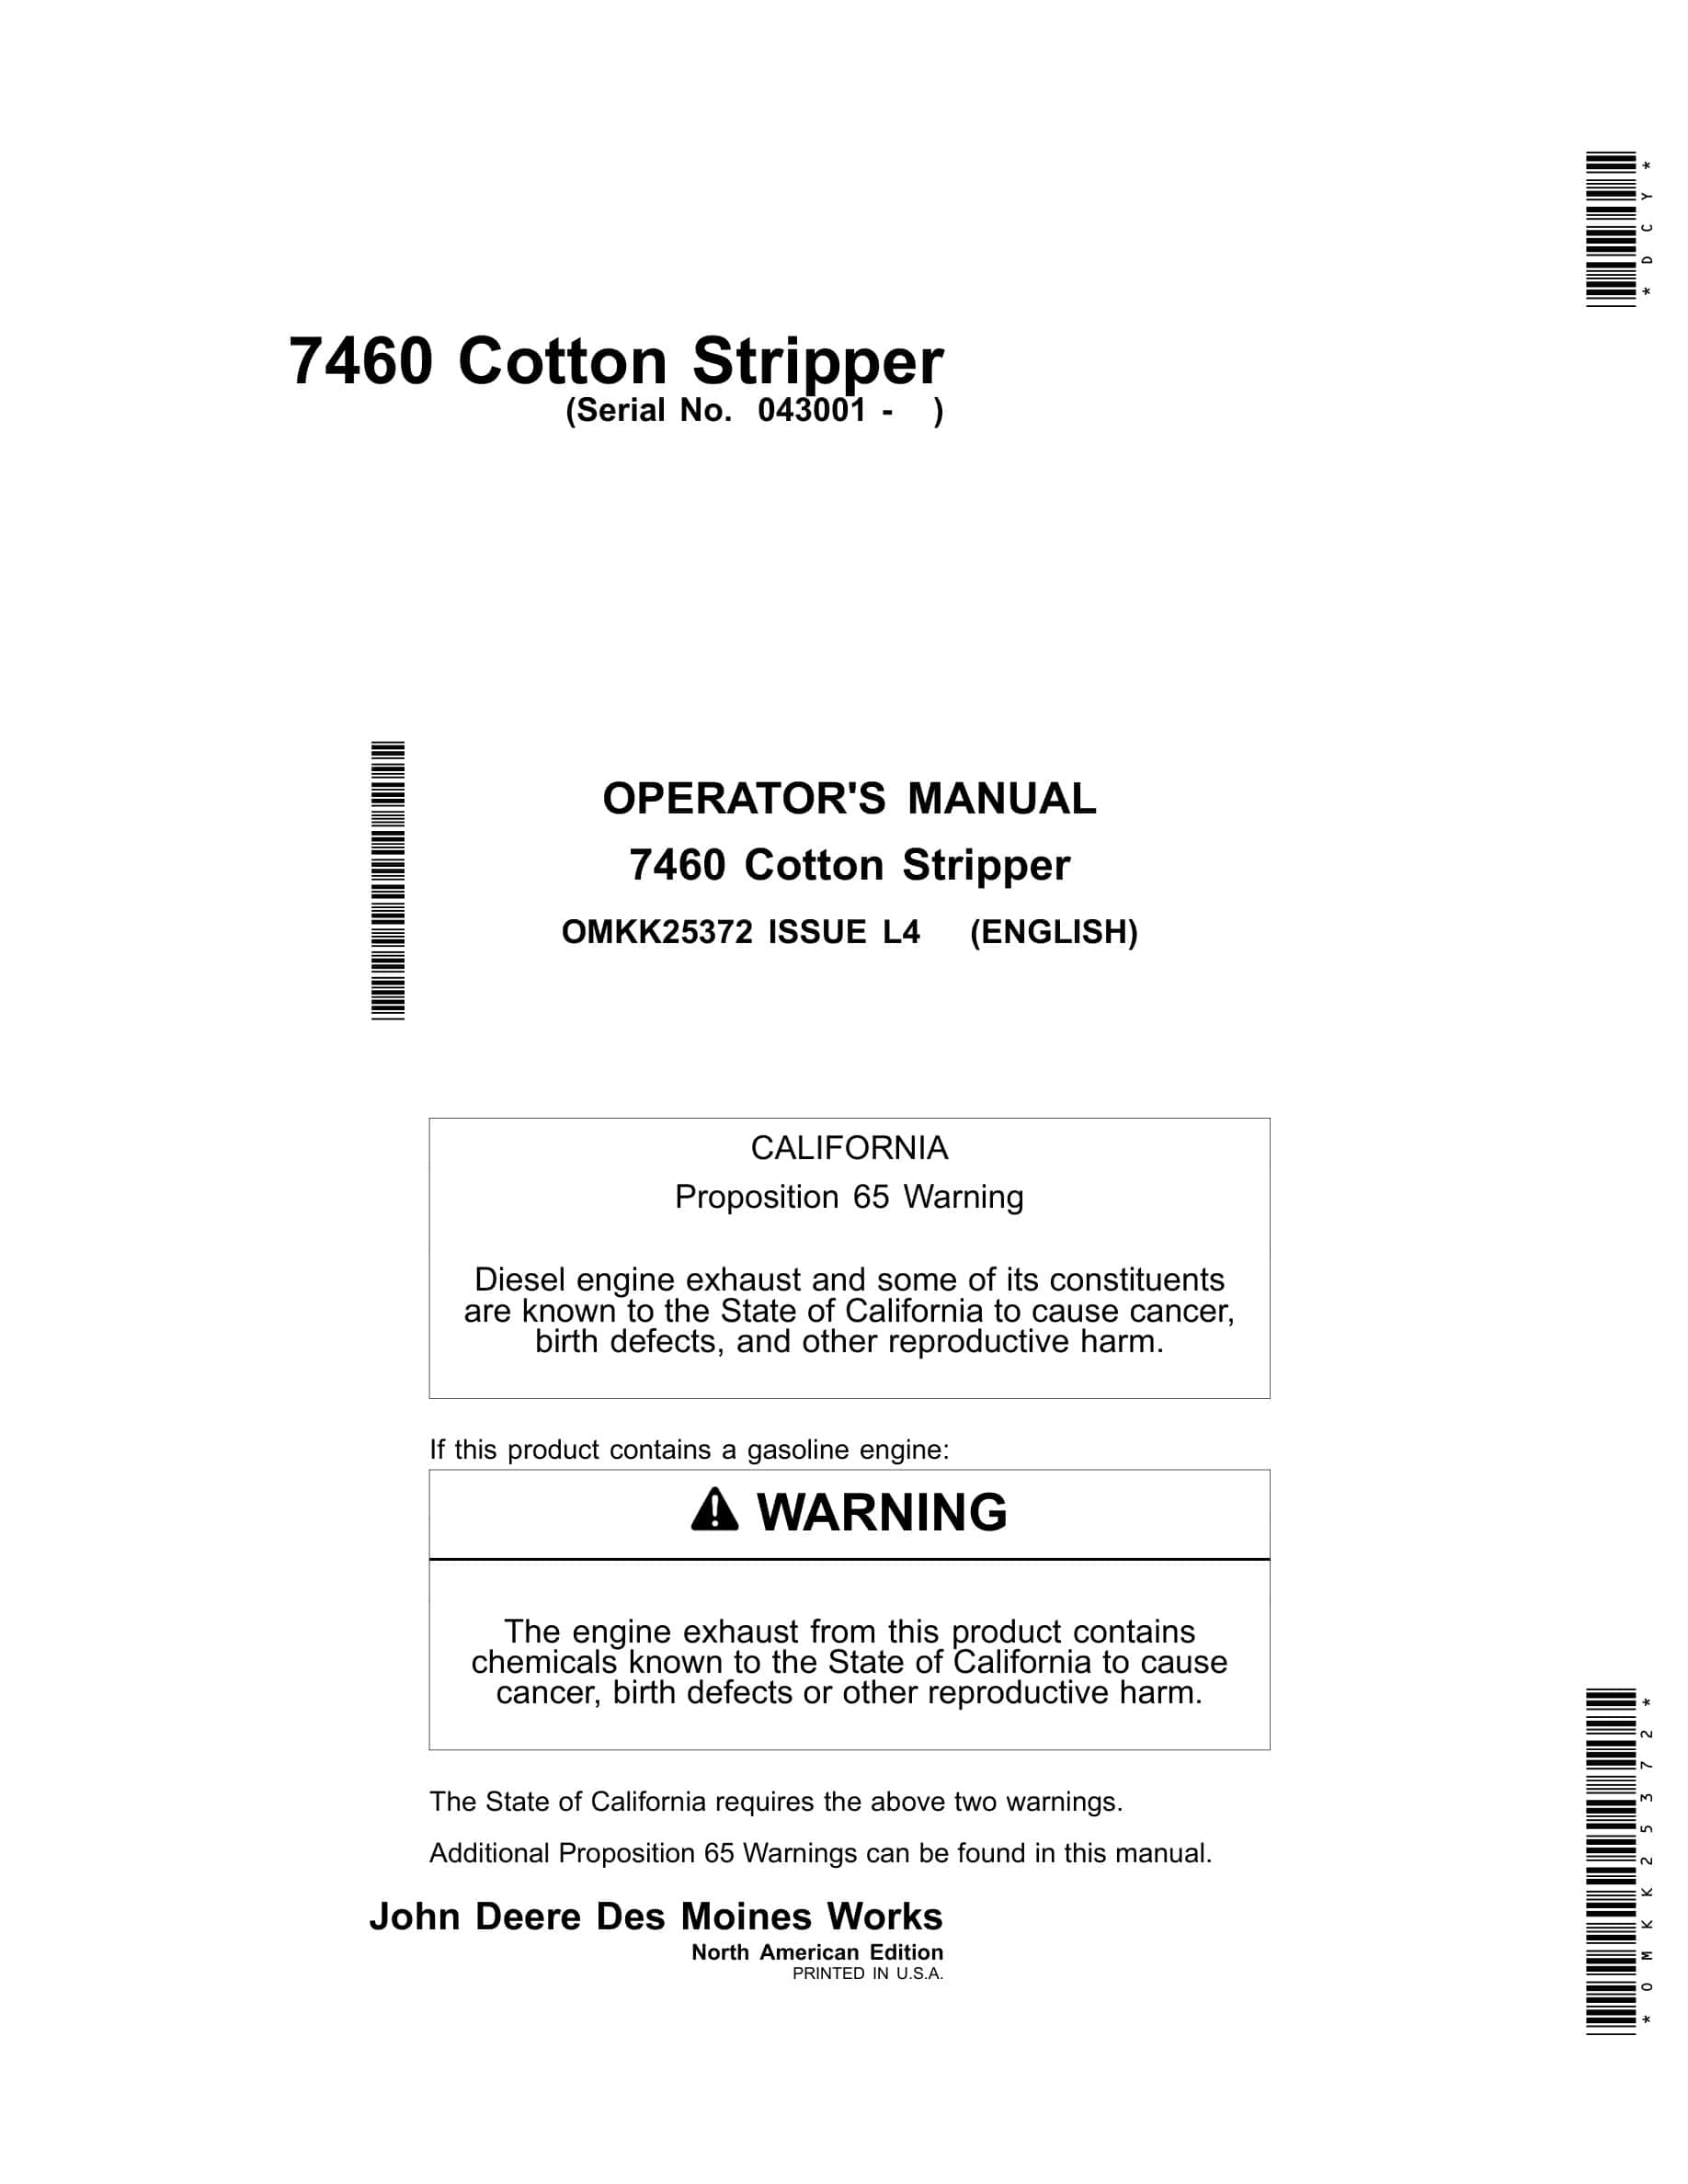 John Deere 7460 Cotton Stripper Operator Manual OMKK25372-1